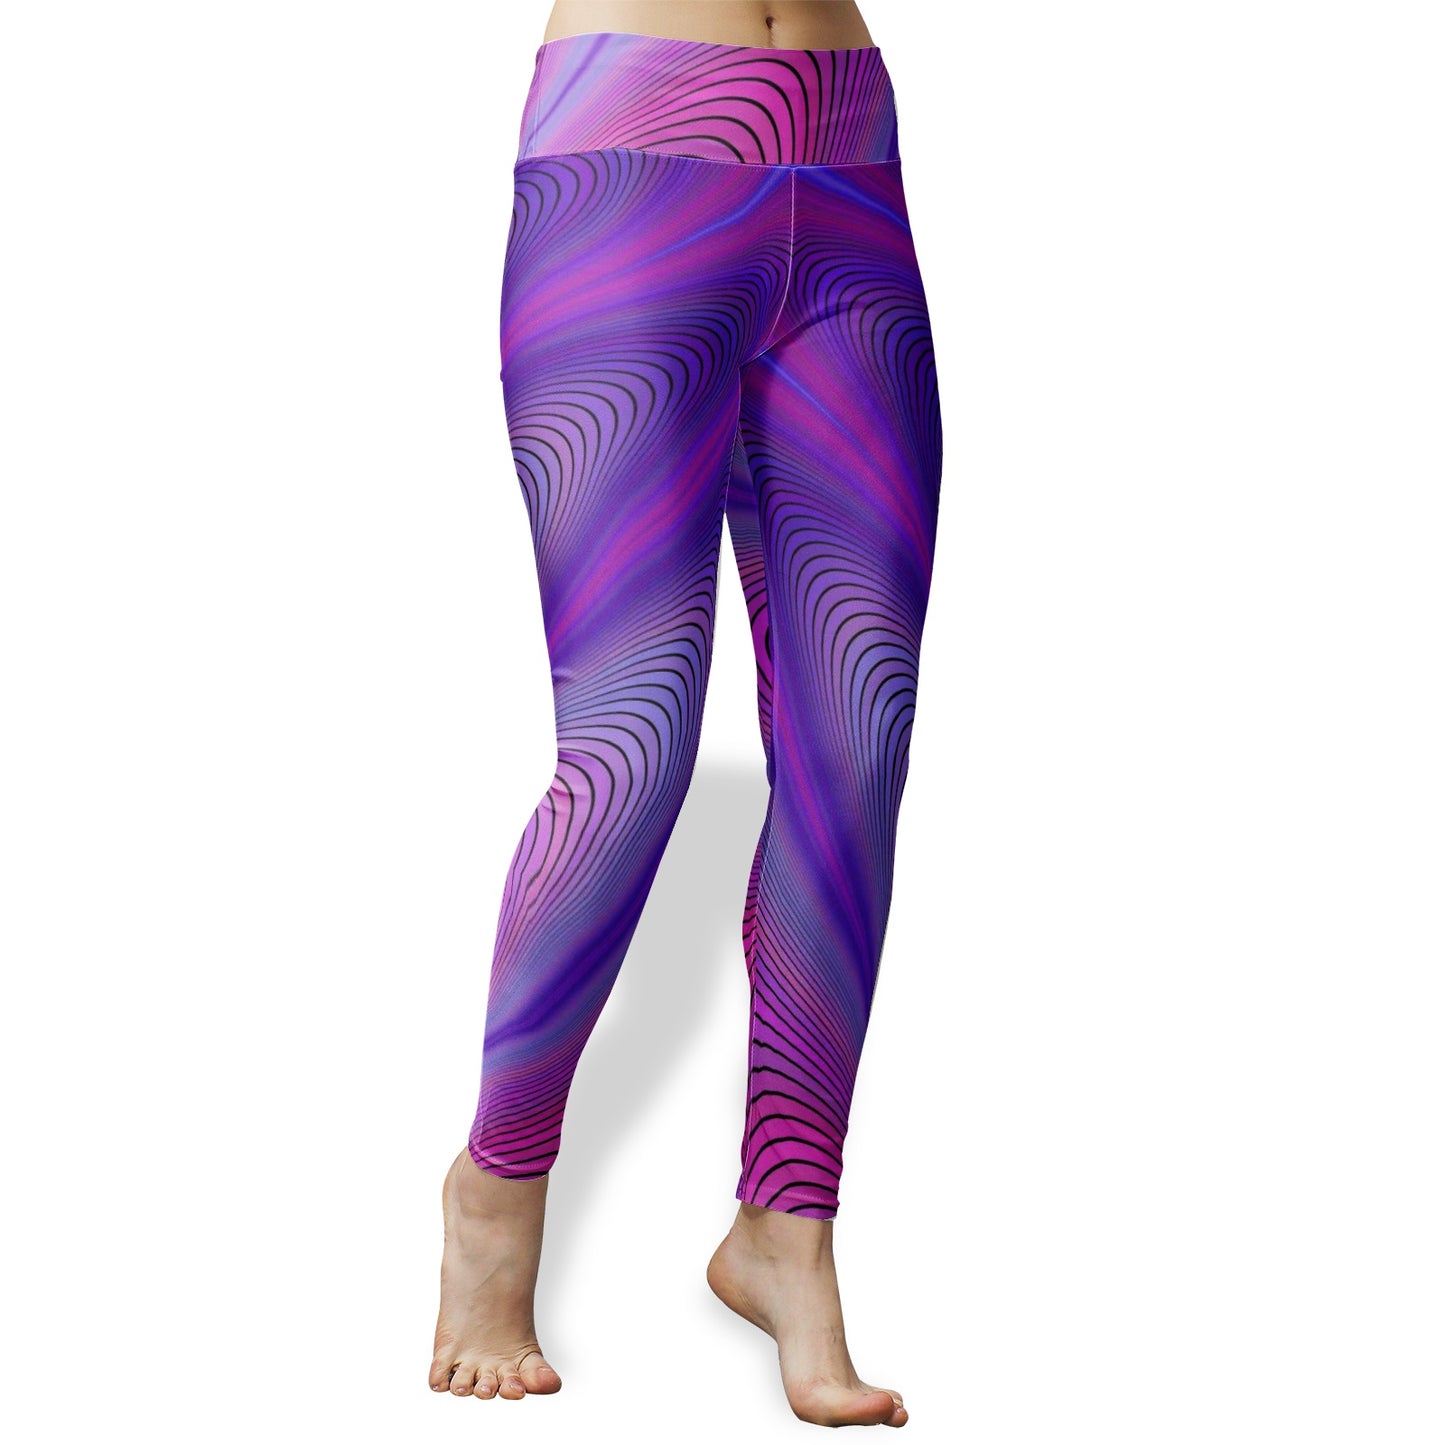 Psychedelic Purple-wawes Women's High Waist Yoga Leggings - DromedarShop.com Online Boutique